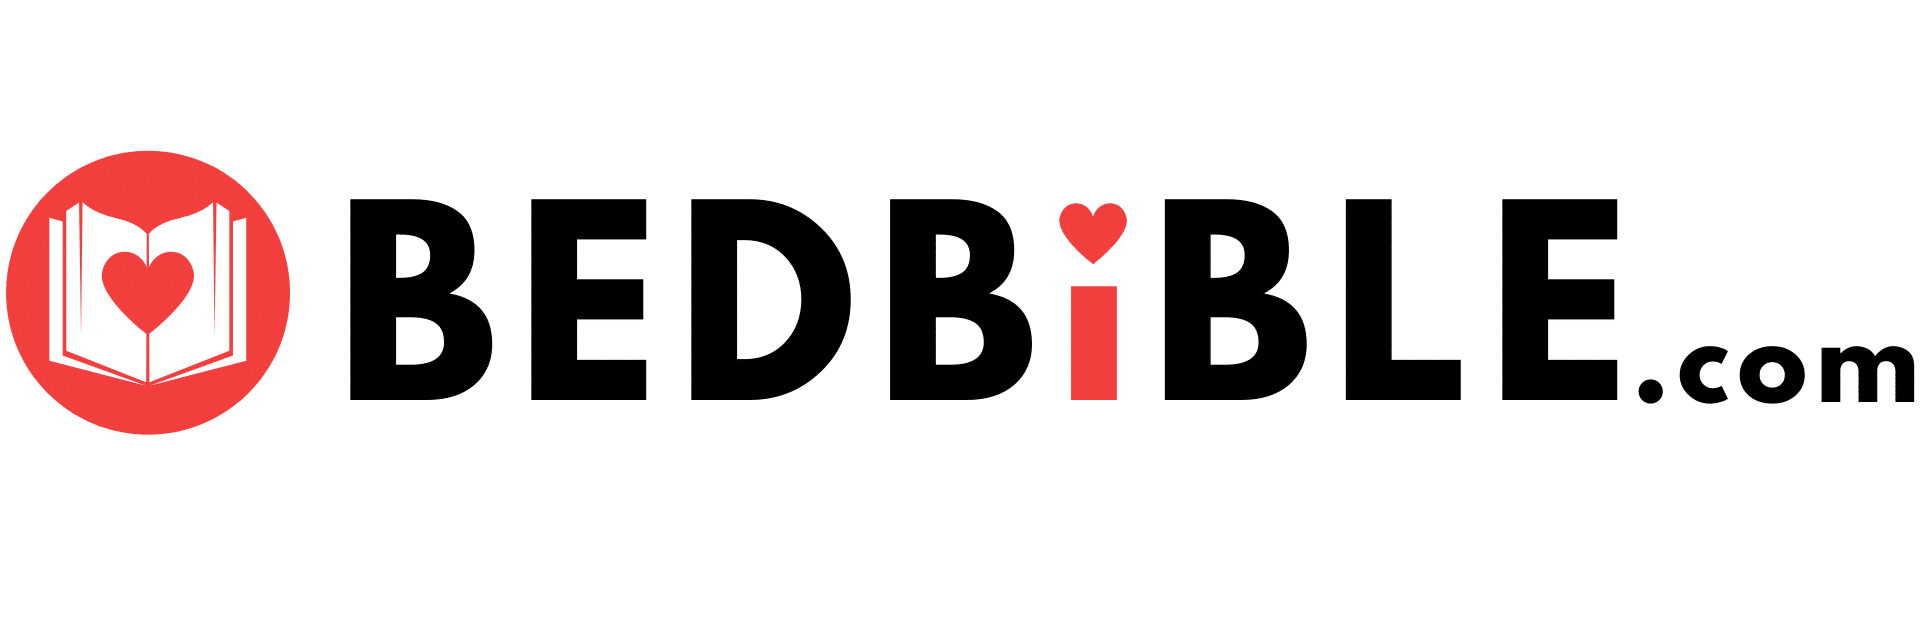 Bedbible.com logo